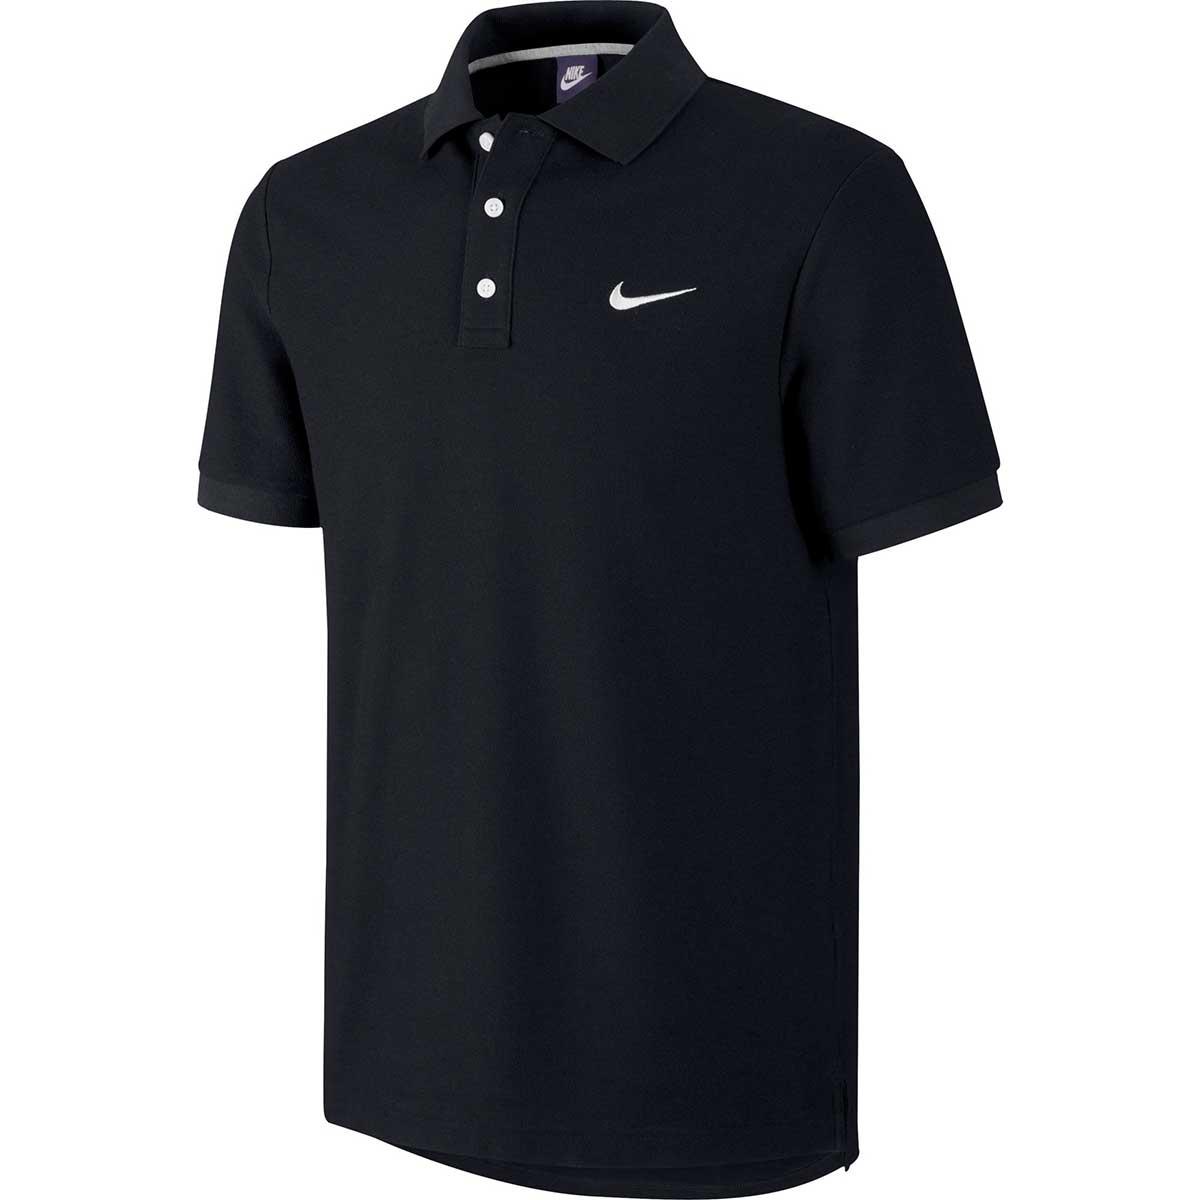 Buy Nike Men's Cotton Polo (Black) Online in India